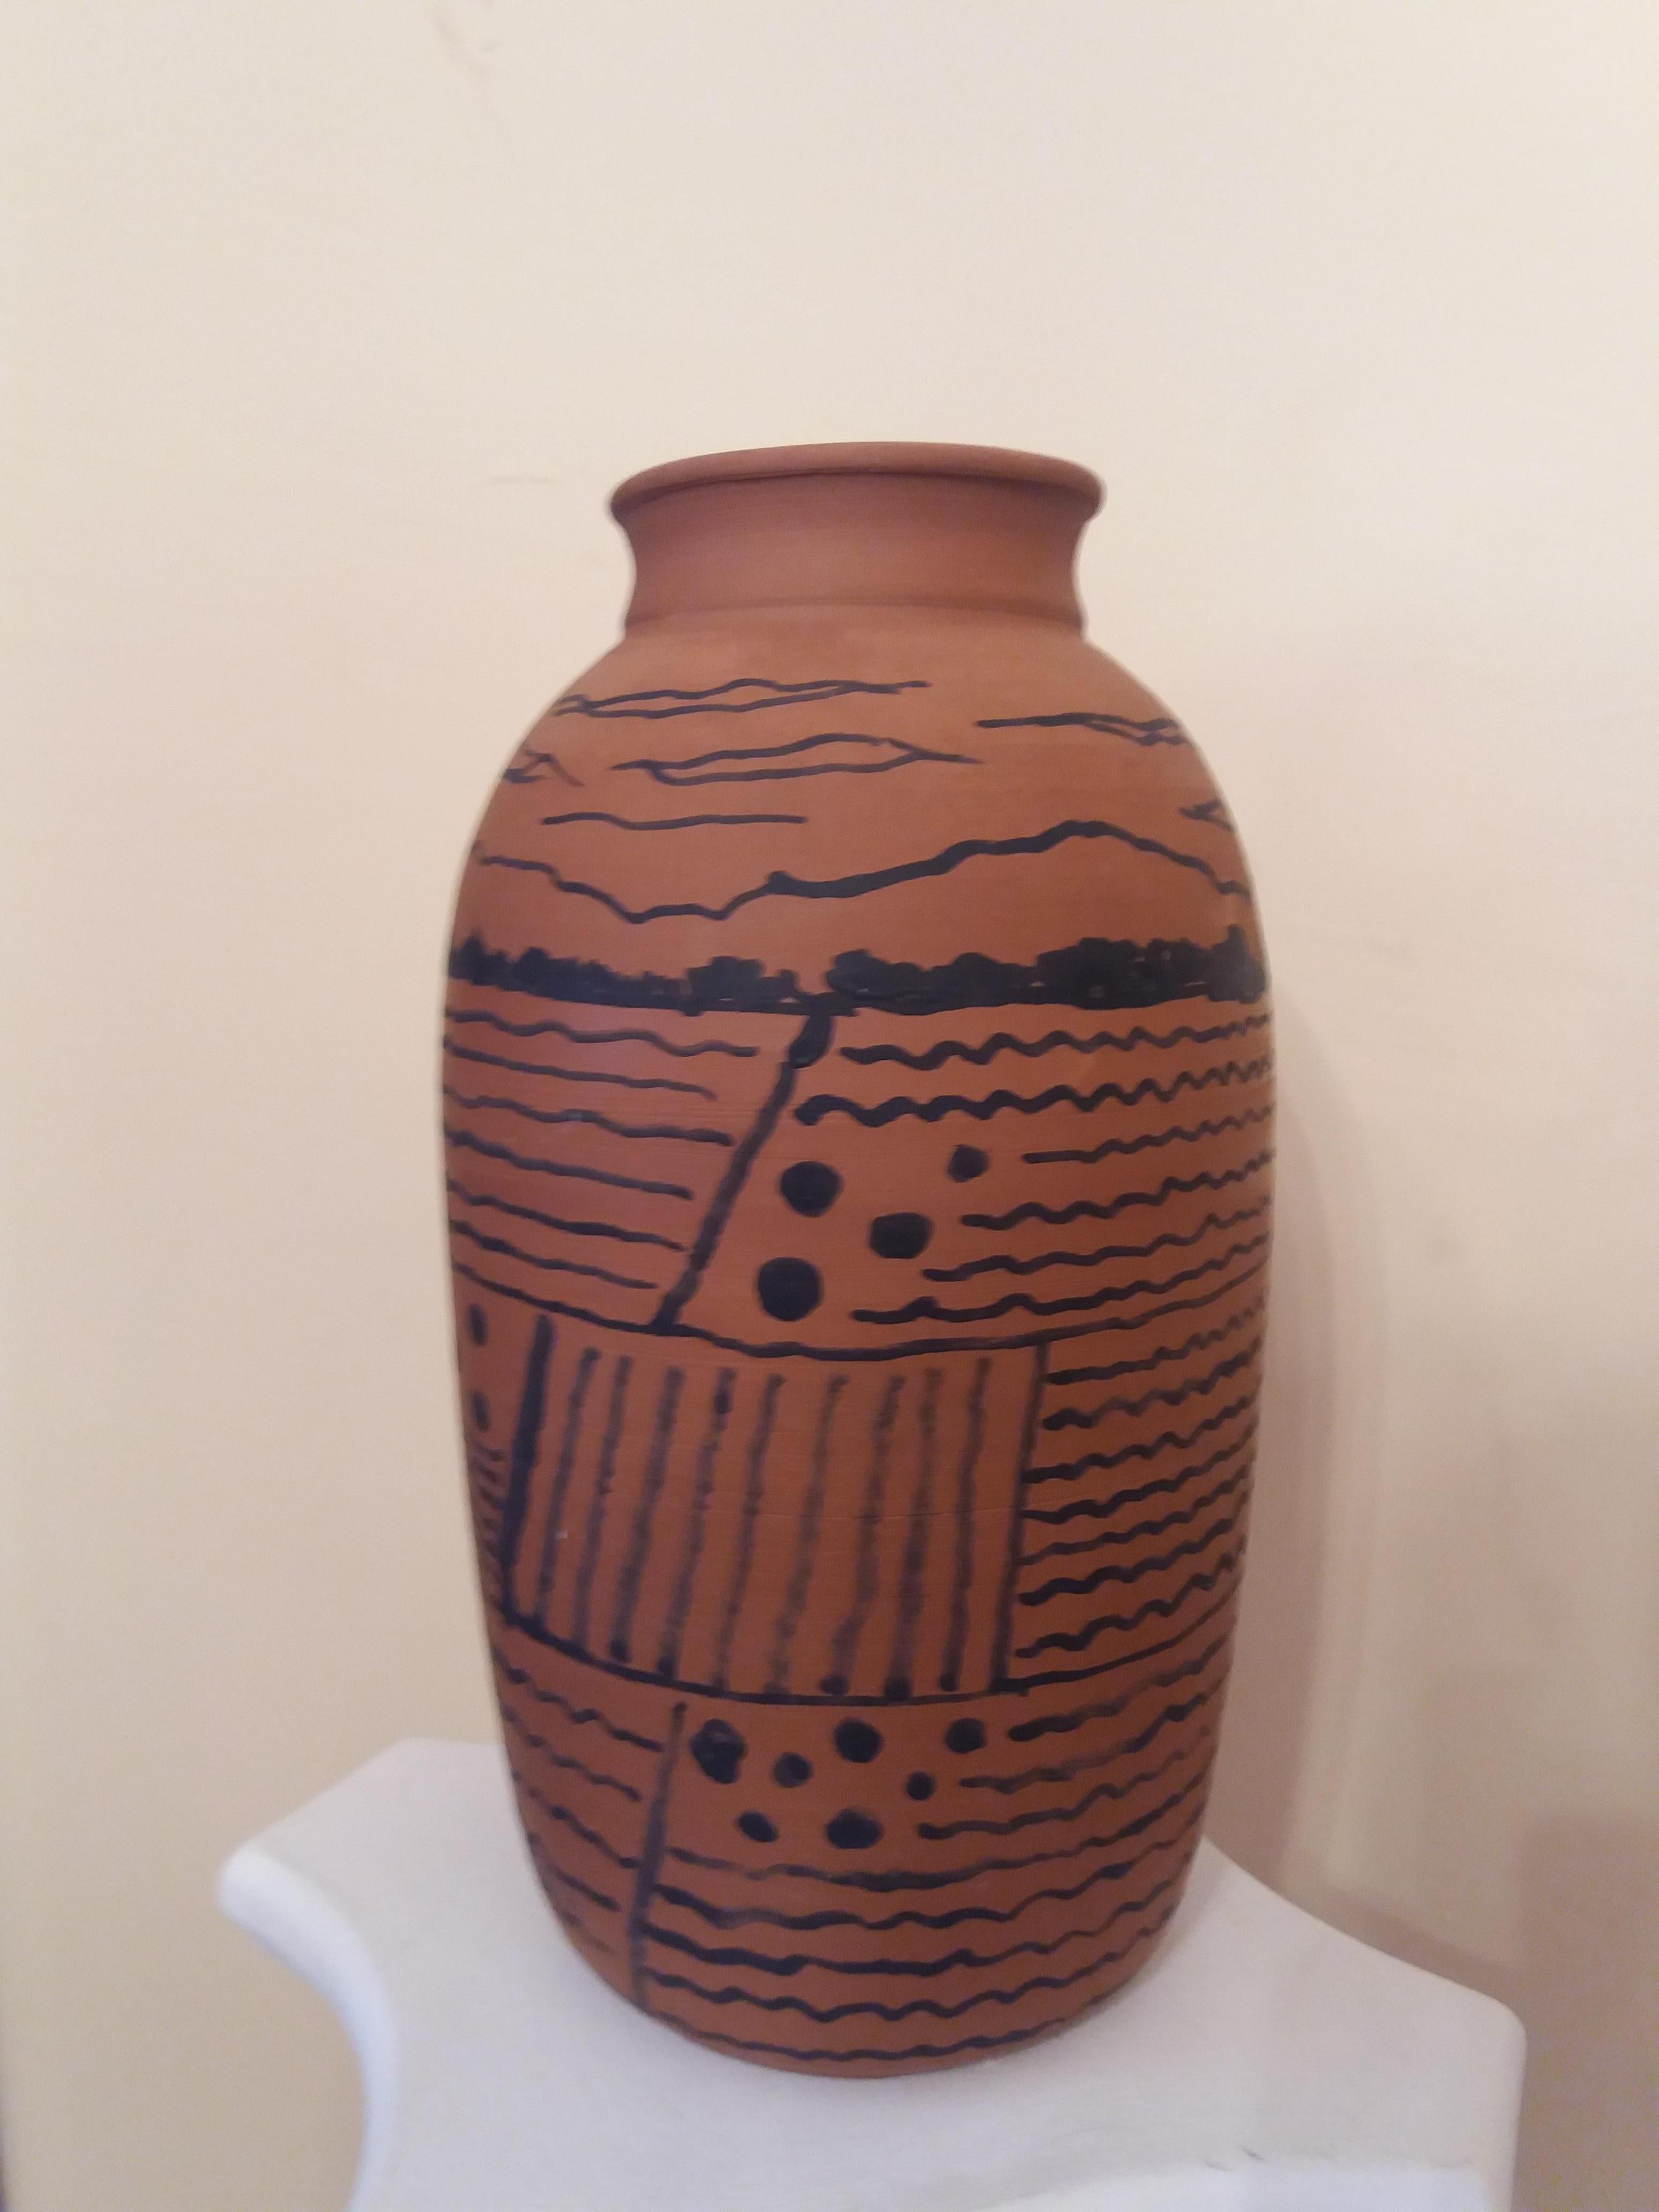  Graspar Riera  Terracotta Cylinder  Mallorca original ceramic sculpture - Sculpture by Gaspar Riera Moragues